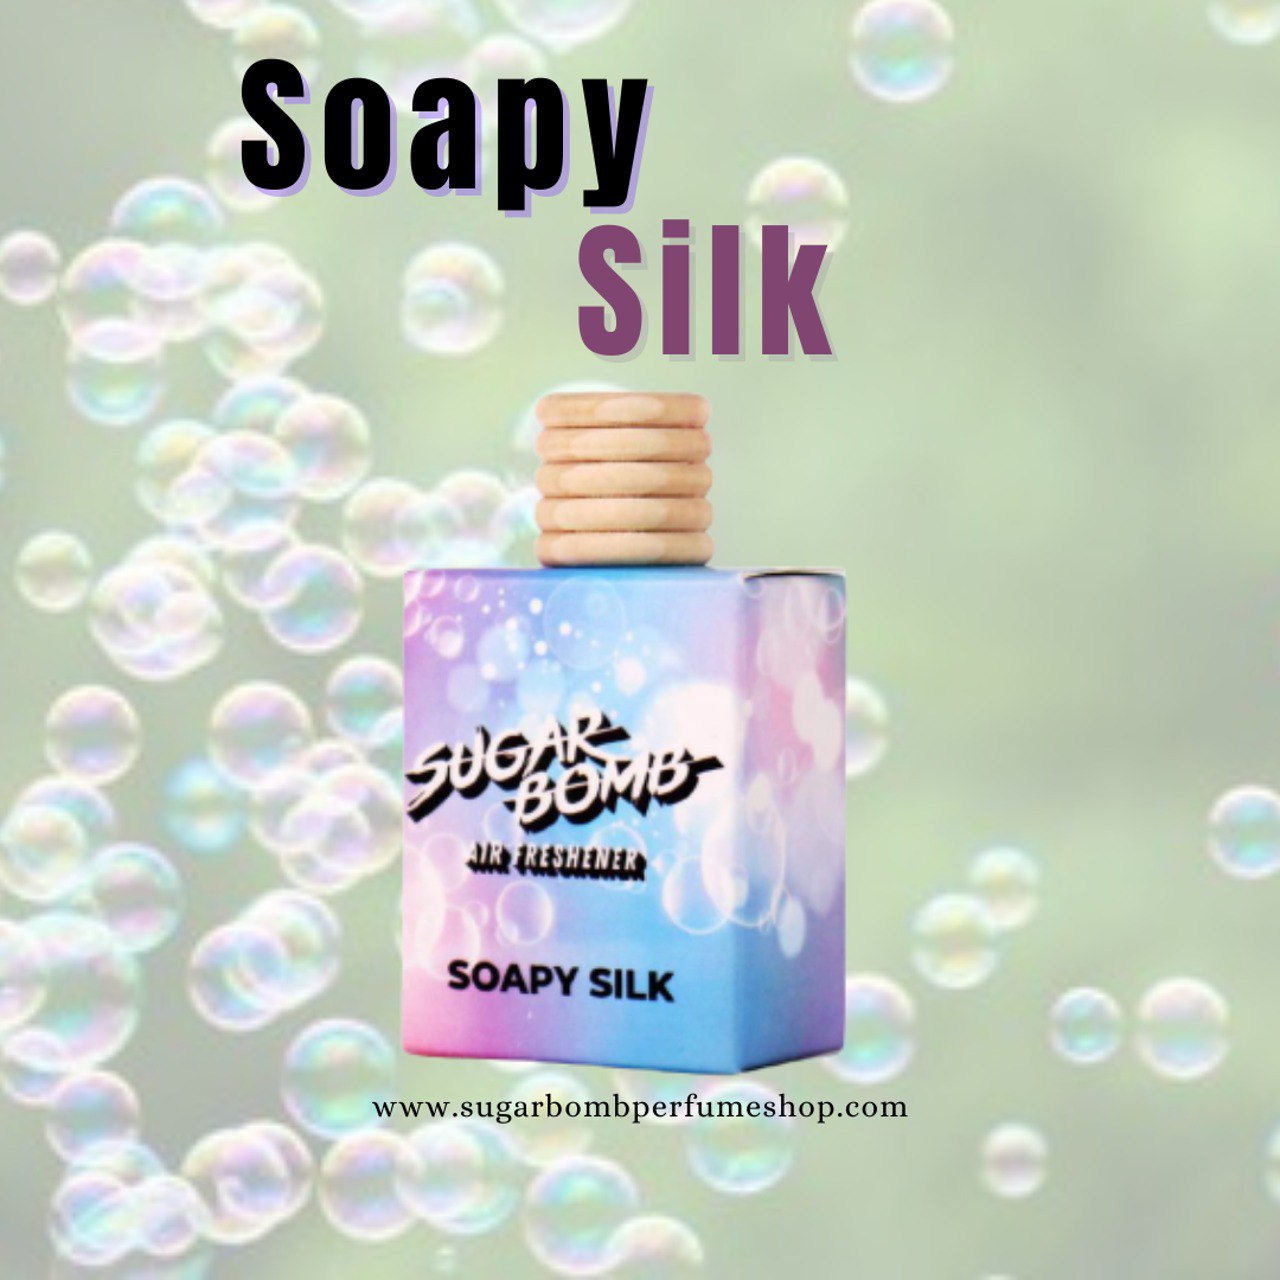 Soapy Silk